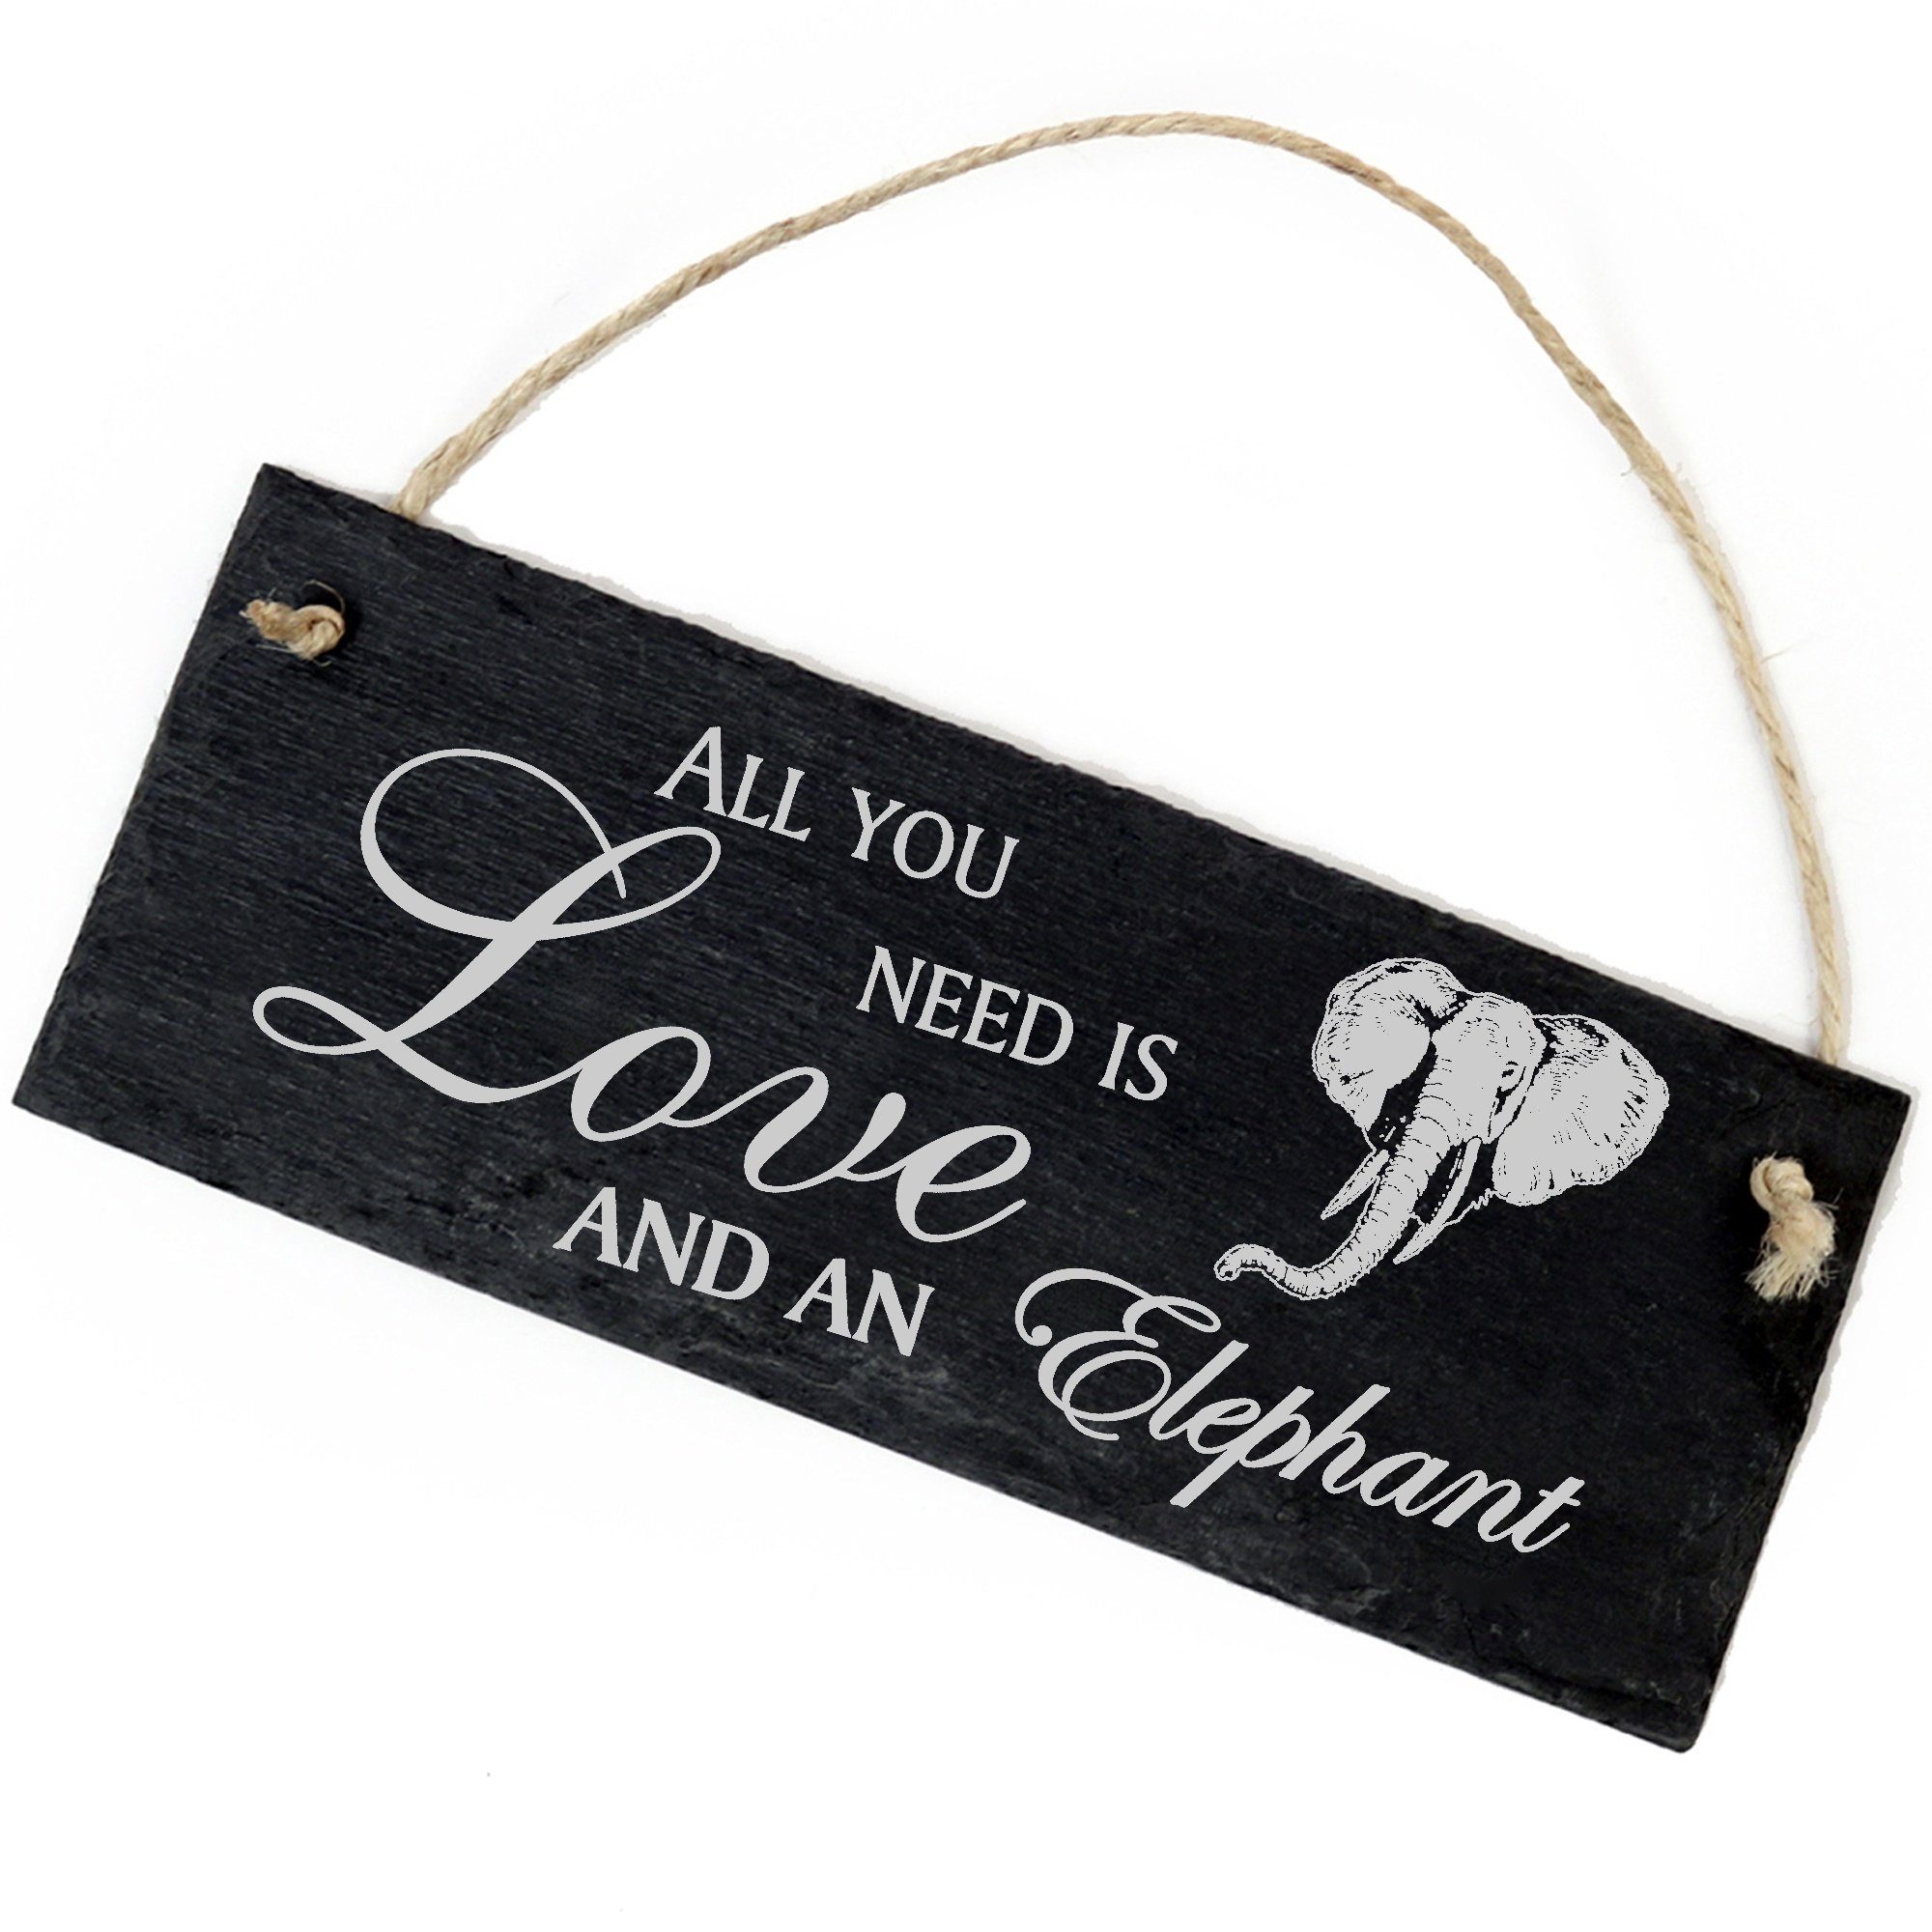 need an Dekolando All Elephant is Love Hängedekoration Kopf Elefant and 22x8cm you